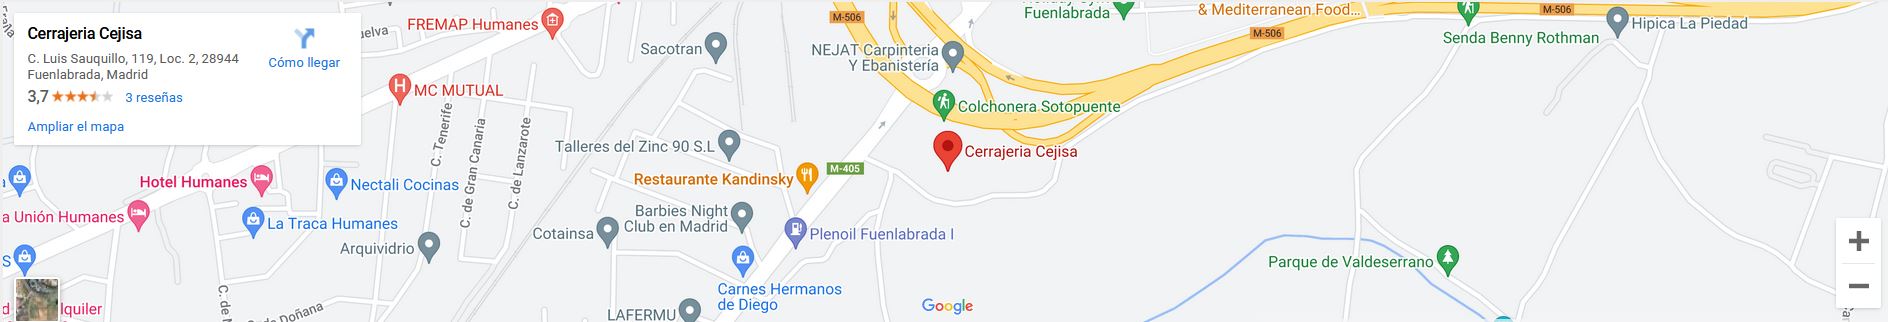 Google maps - Cejisa - Luis Sauquillo - Fuenlabrada